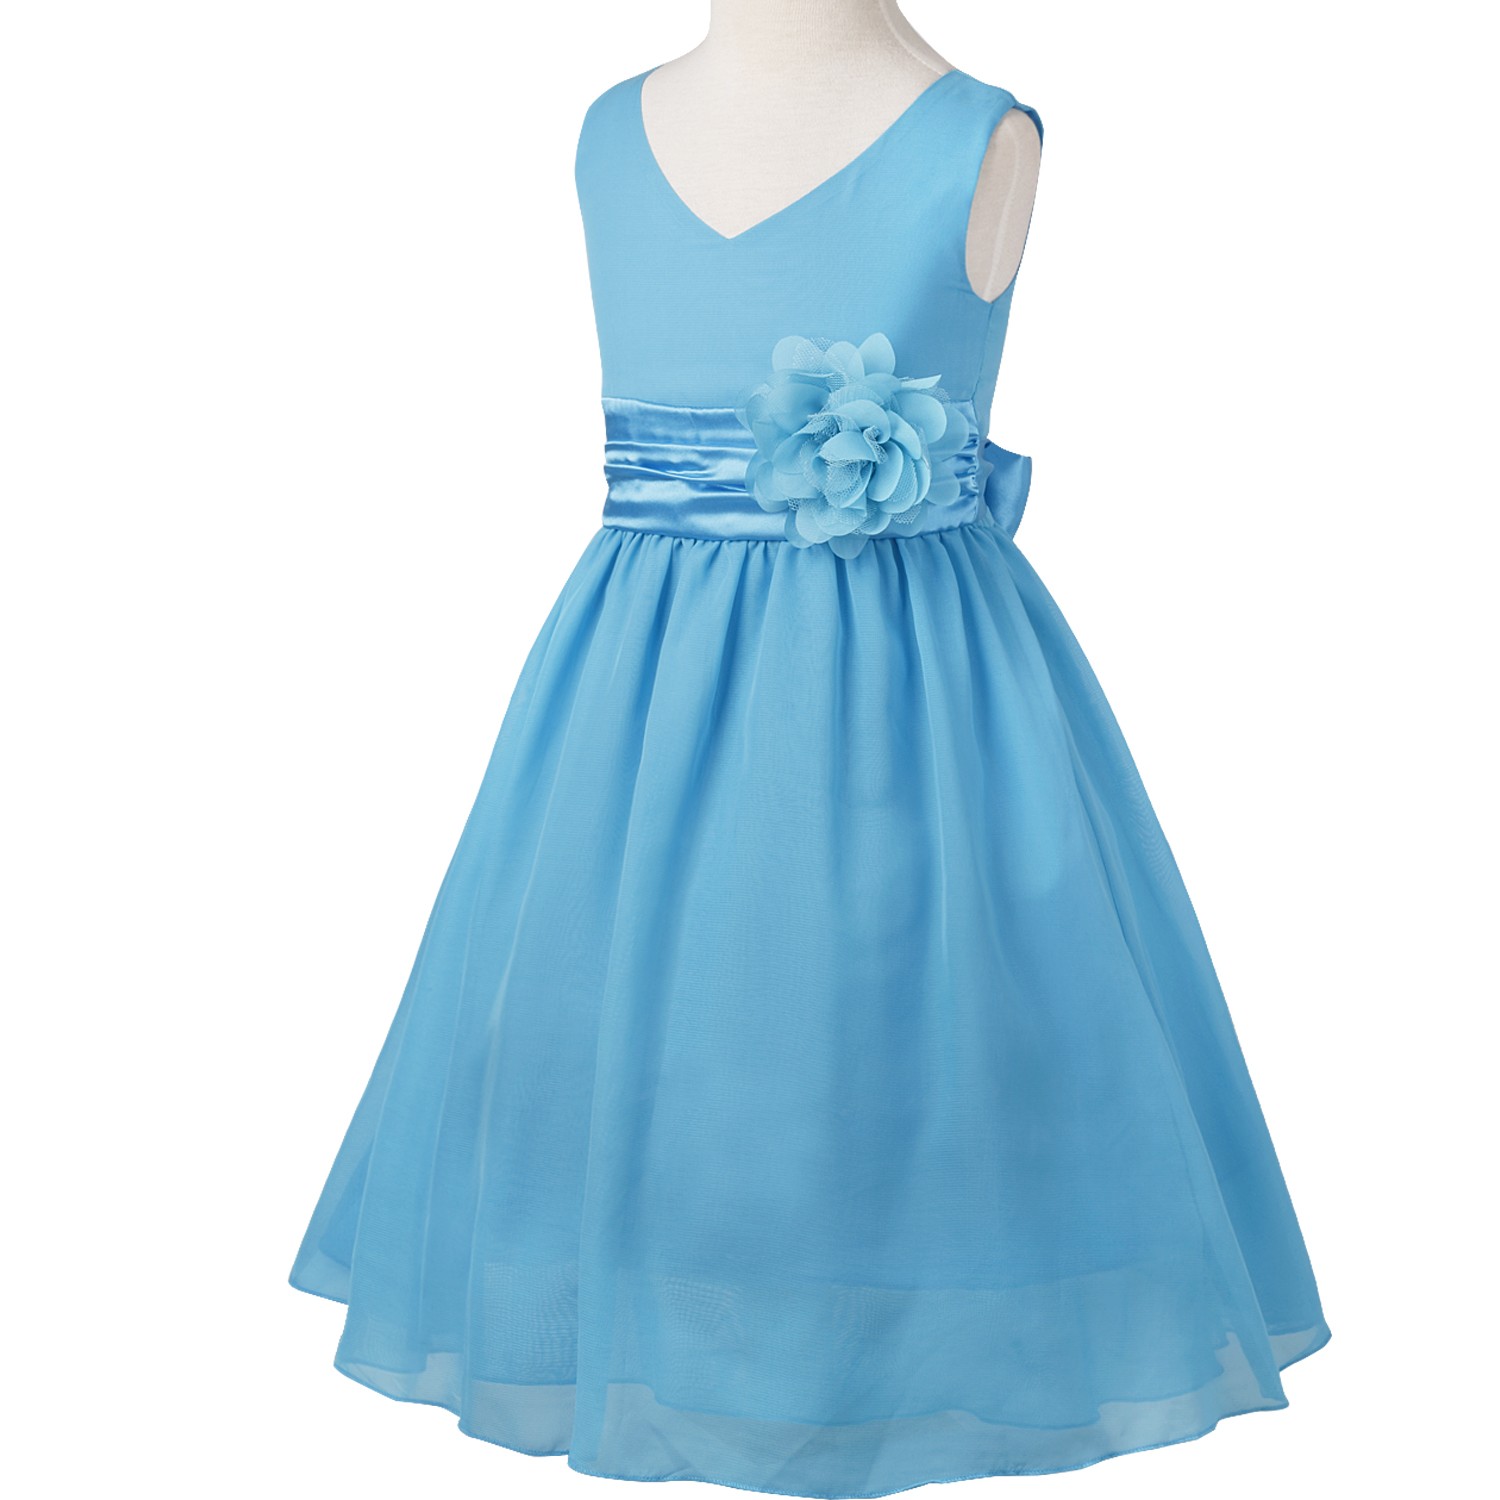 Blue Kids Bridesmaid Dresses